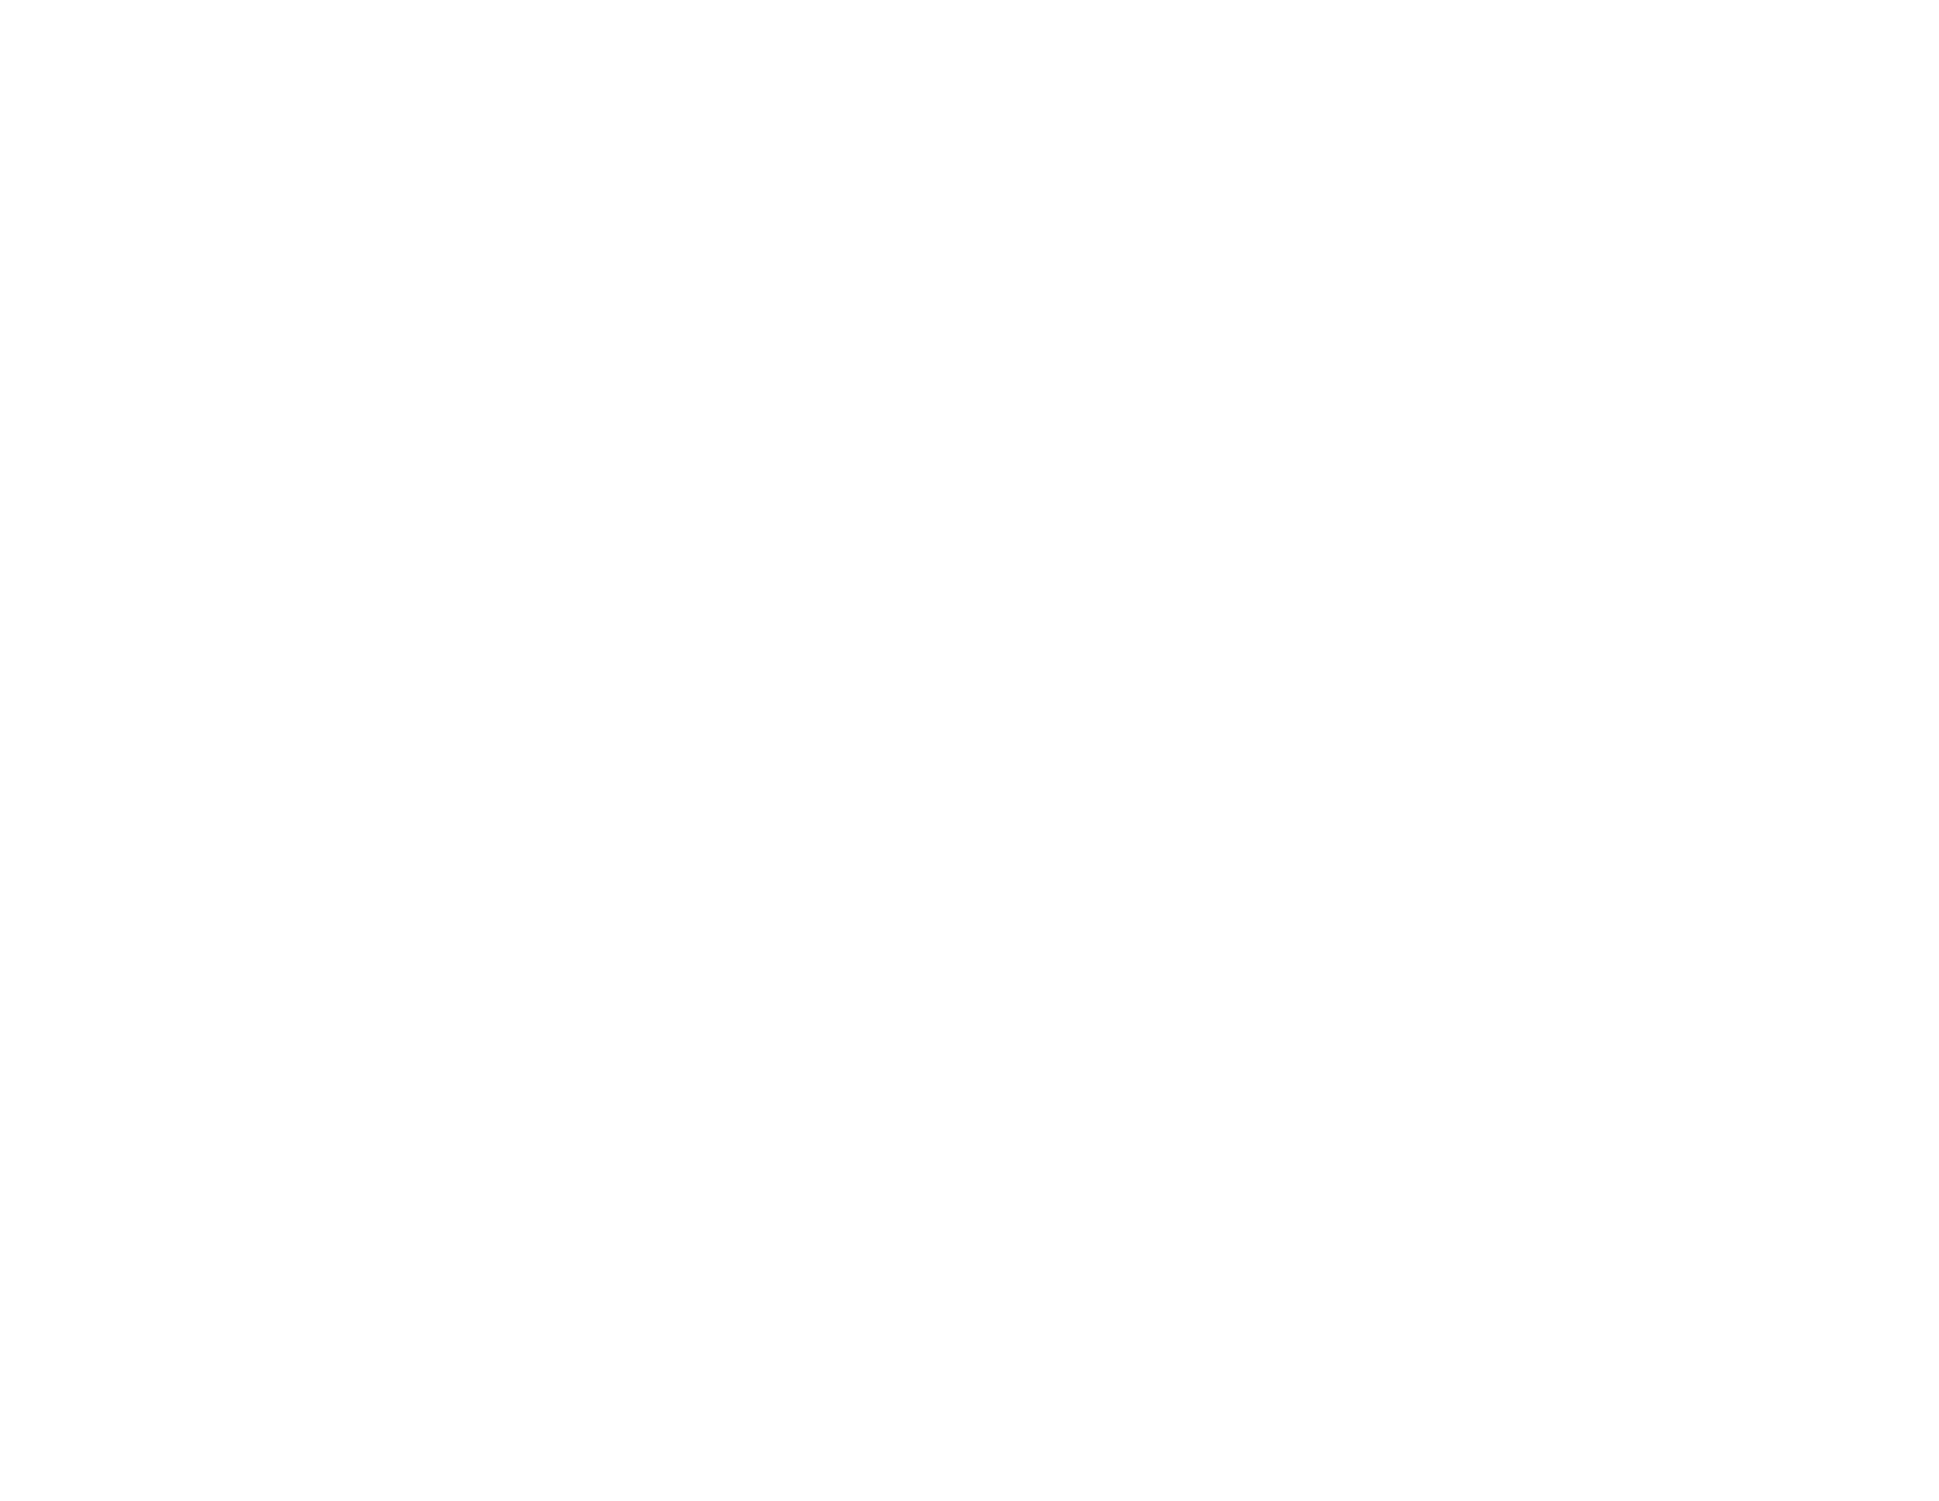 Beat&Mix